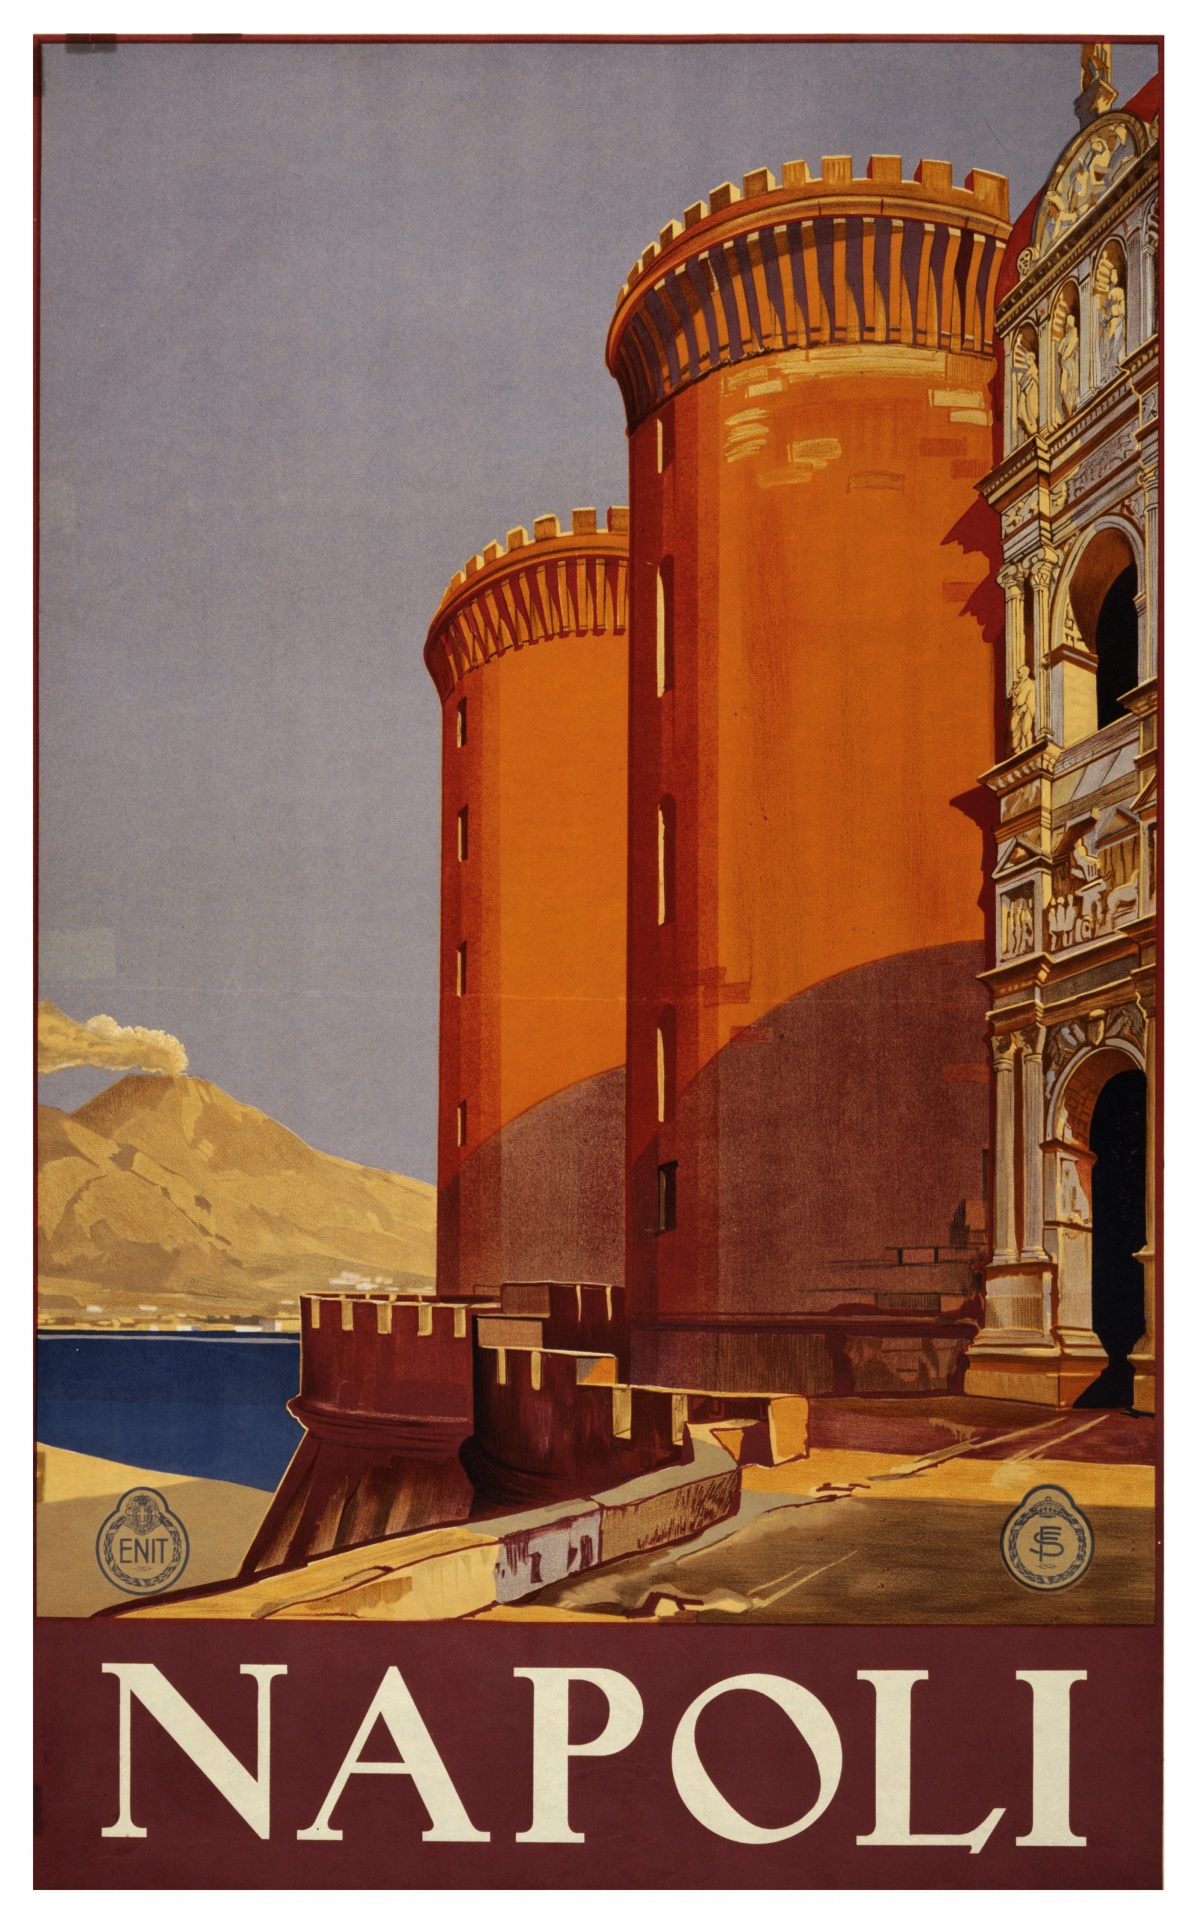 Vintage travel poster for Naples, Napoli, Italy